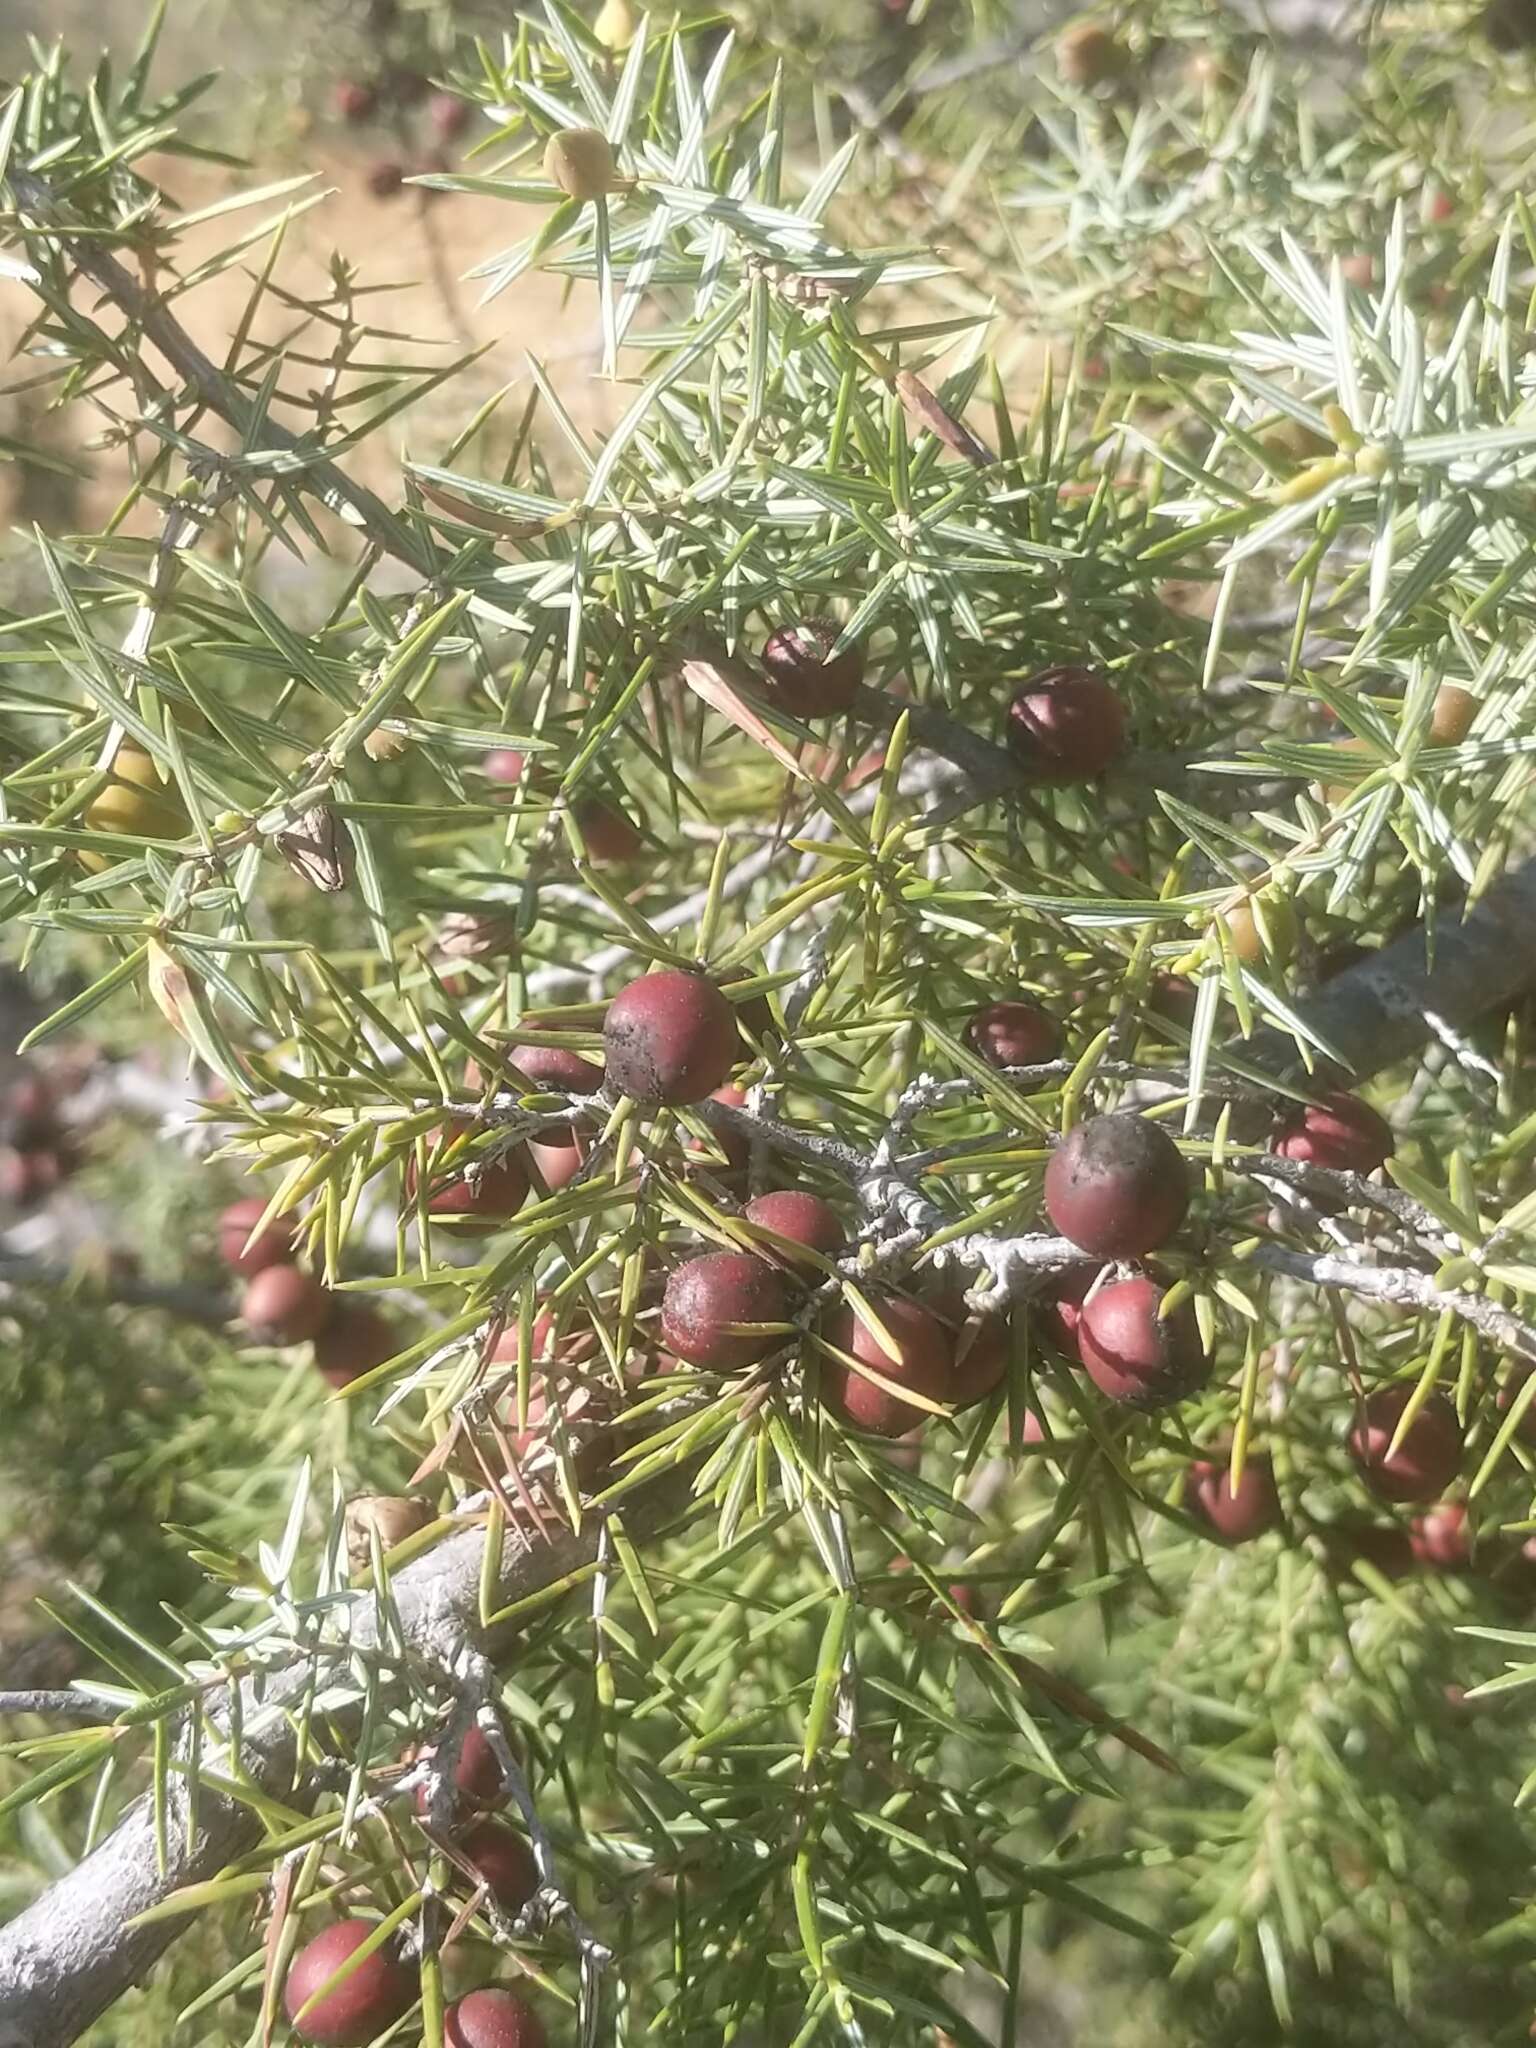 Imagem de Juniperus oxycedrus subsp. oxycedrus